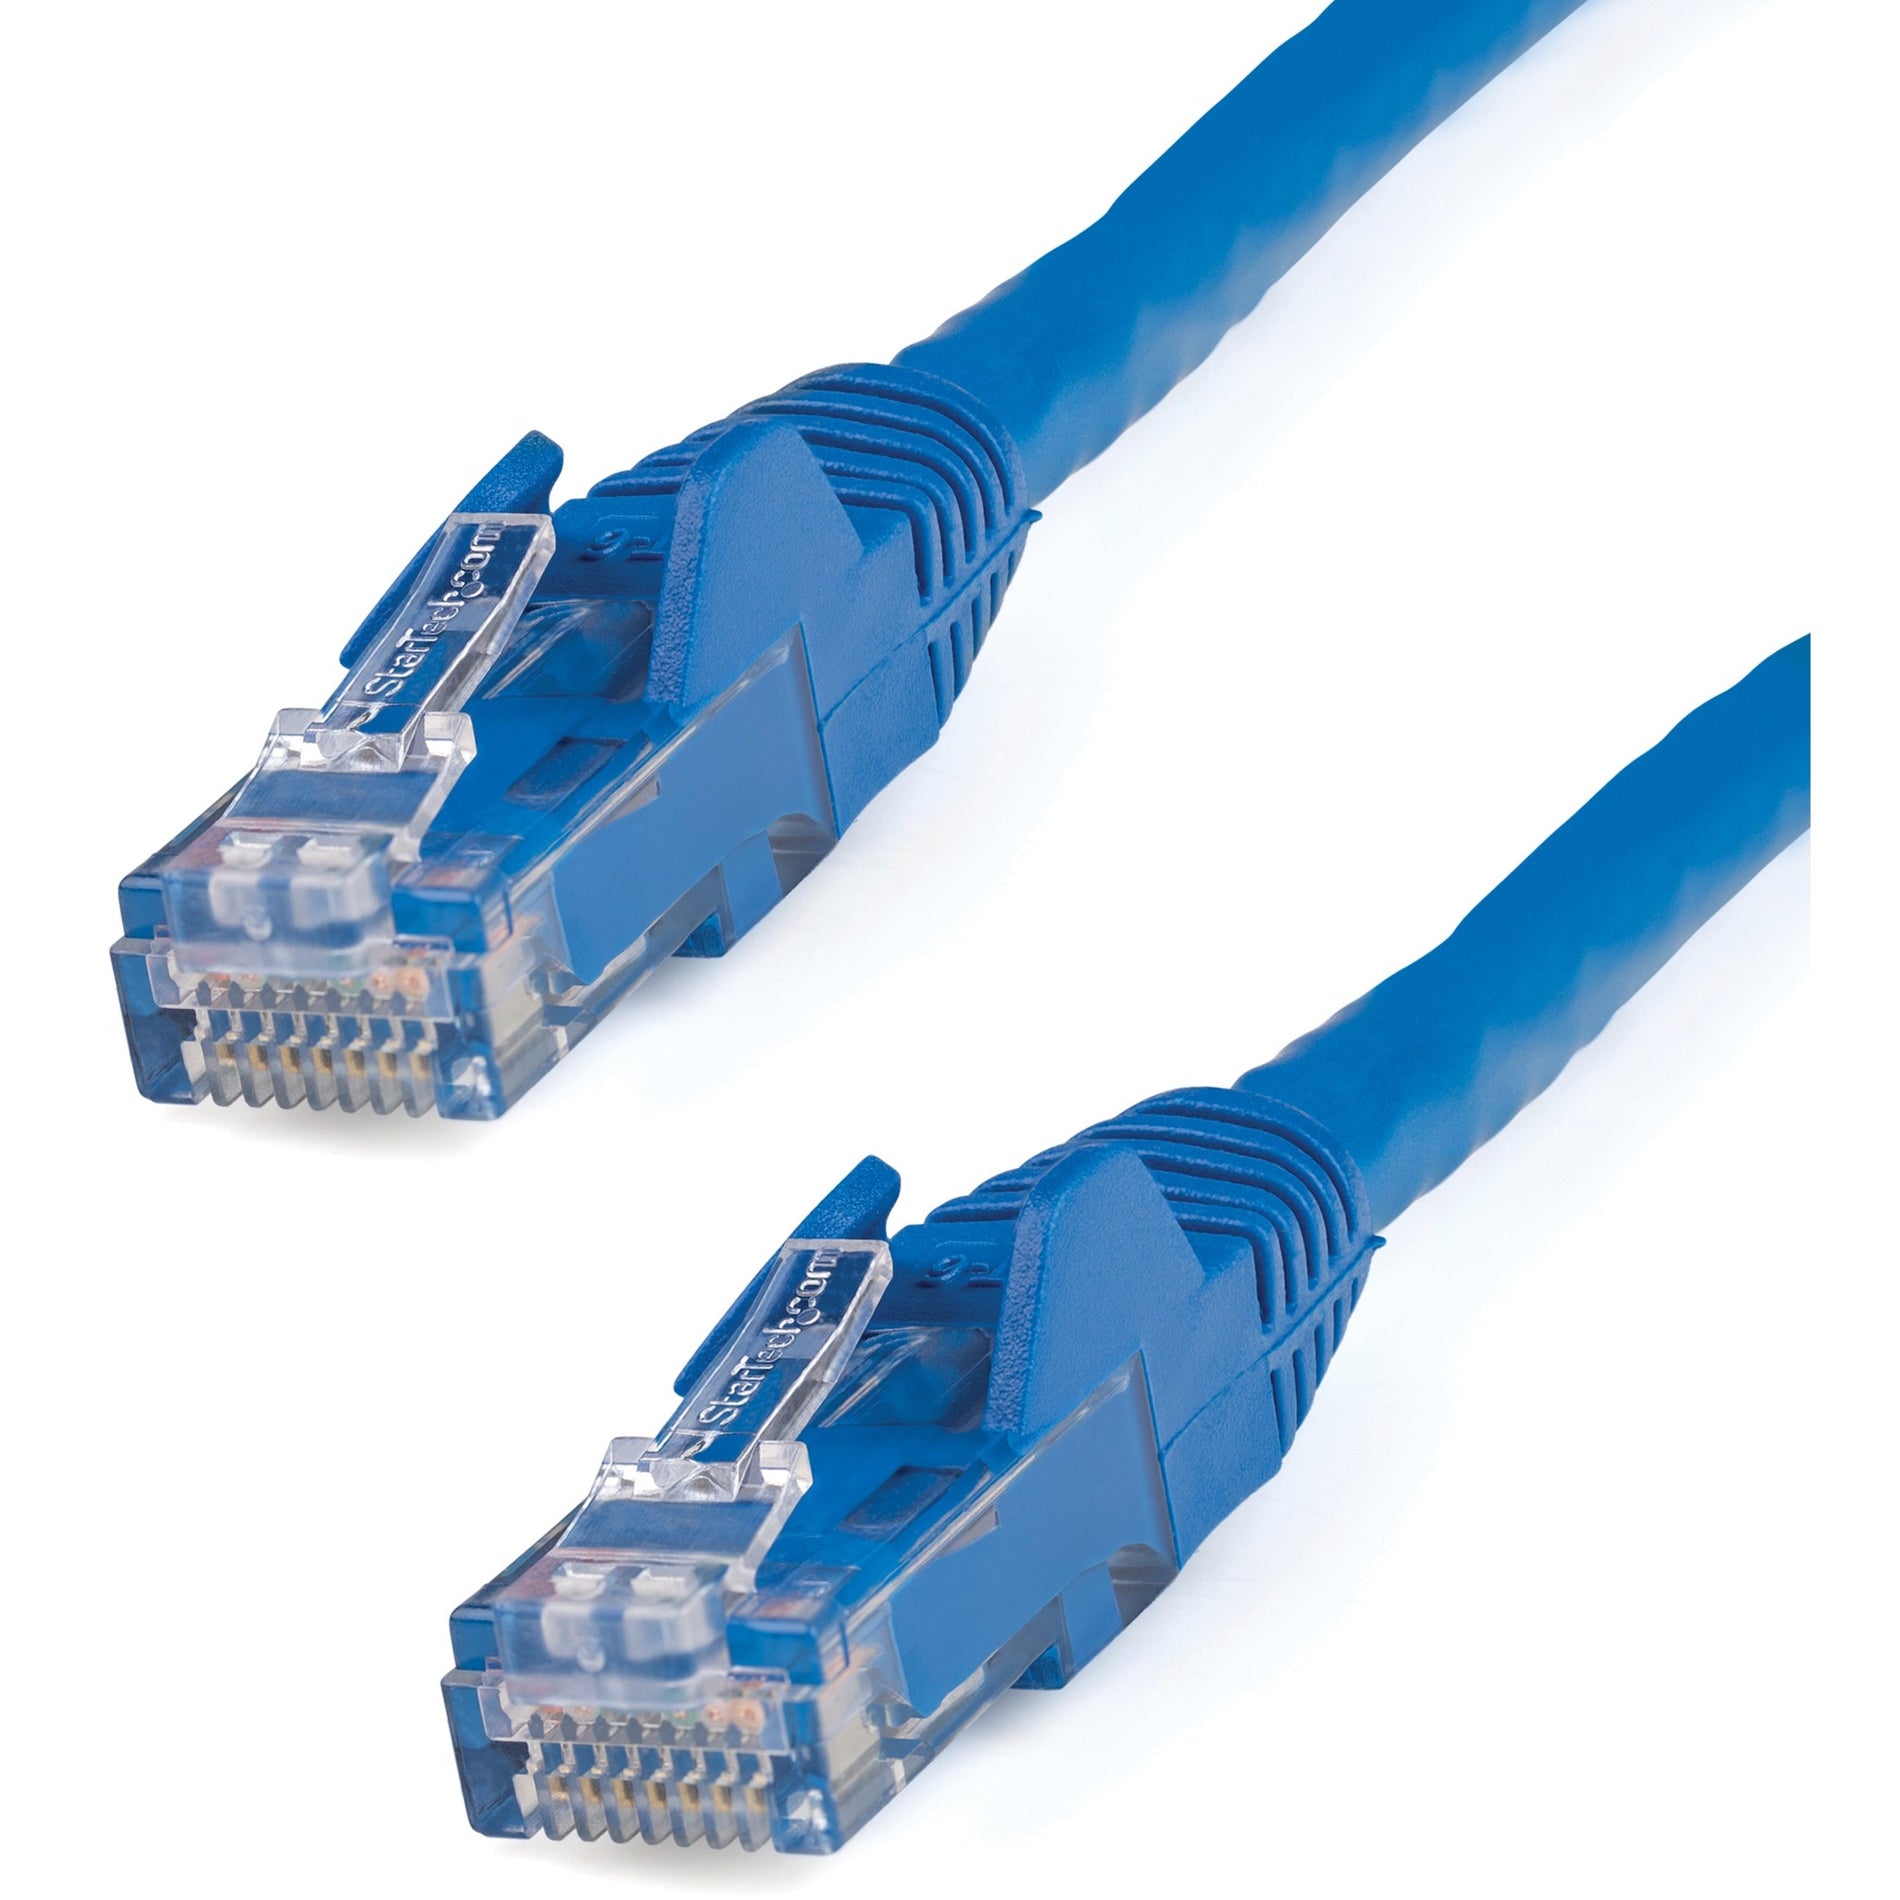 StarTech.com N6PATCH15BL 15 ft Blue Snagless Cat6 Patch Cable, ETL Verified, Lifetime Warranty, 10 Gbit/s Data Transfer Rate